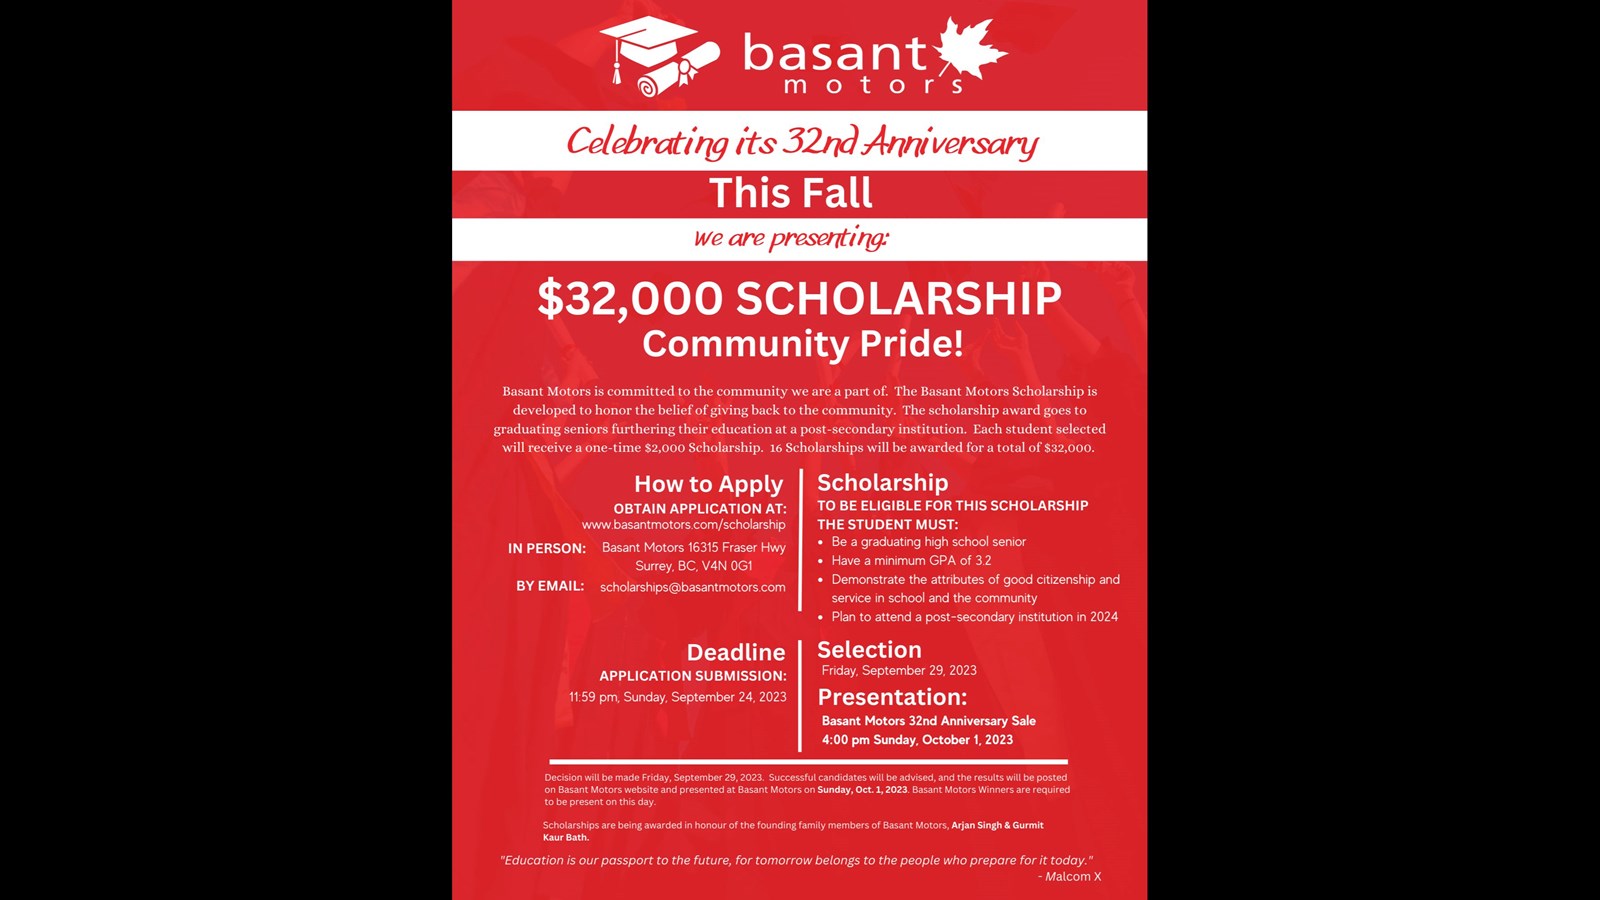 The 2023 Basant Motors Scholarship